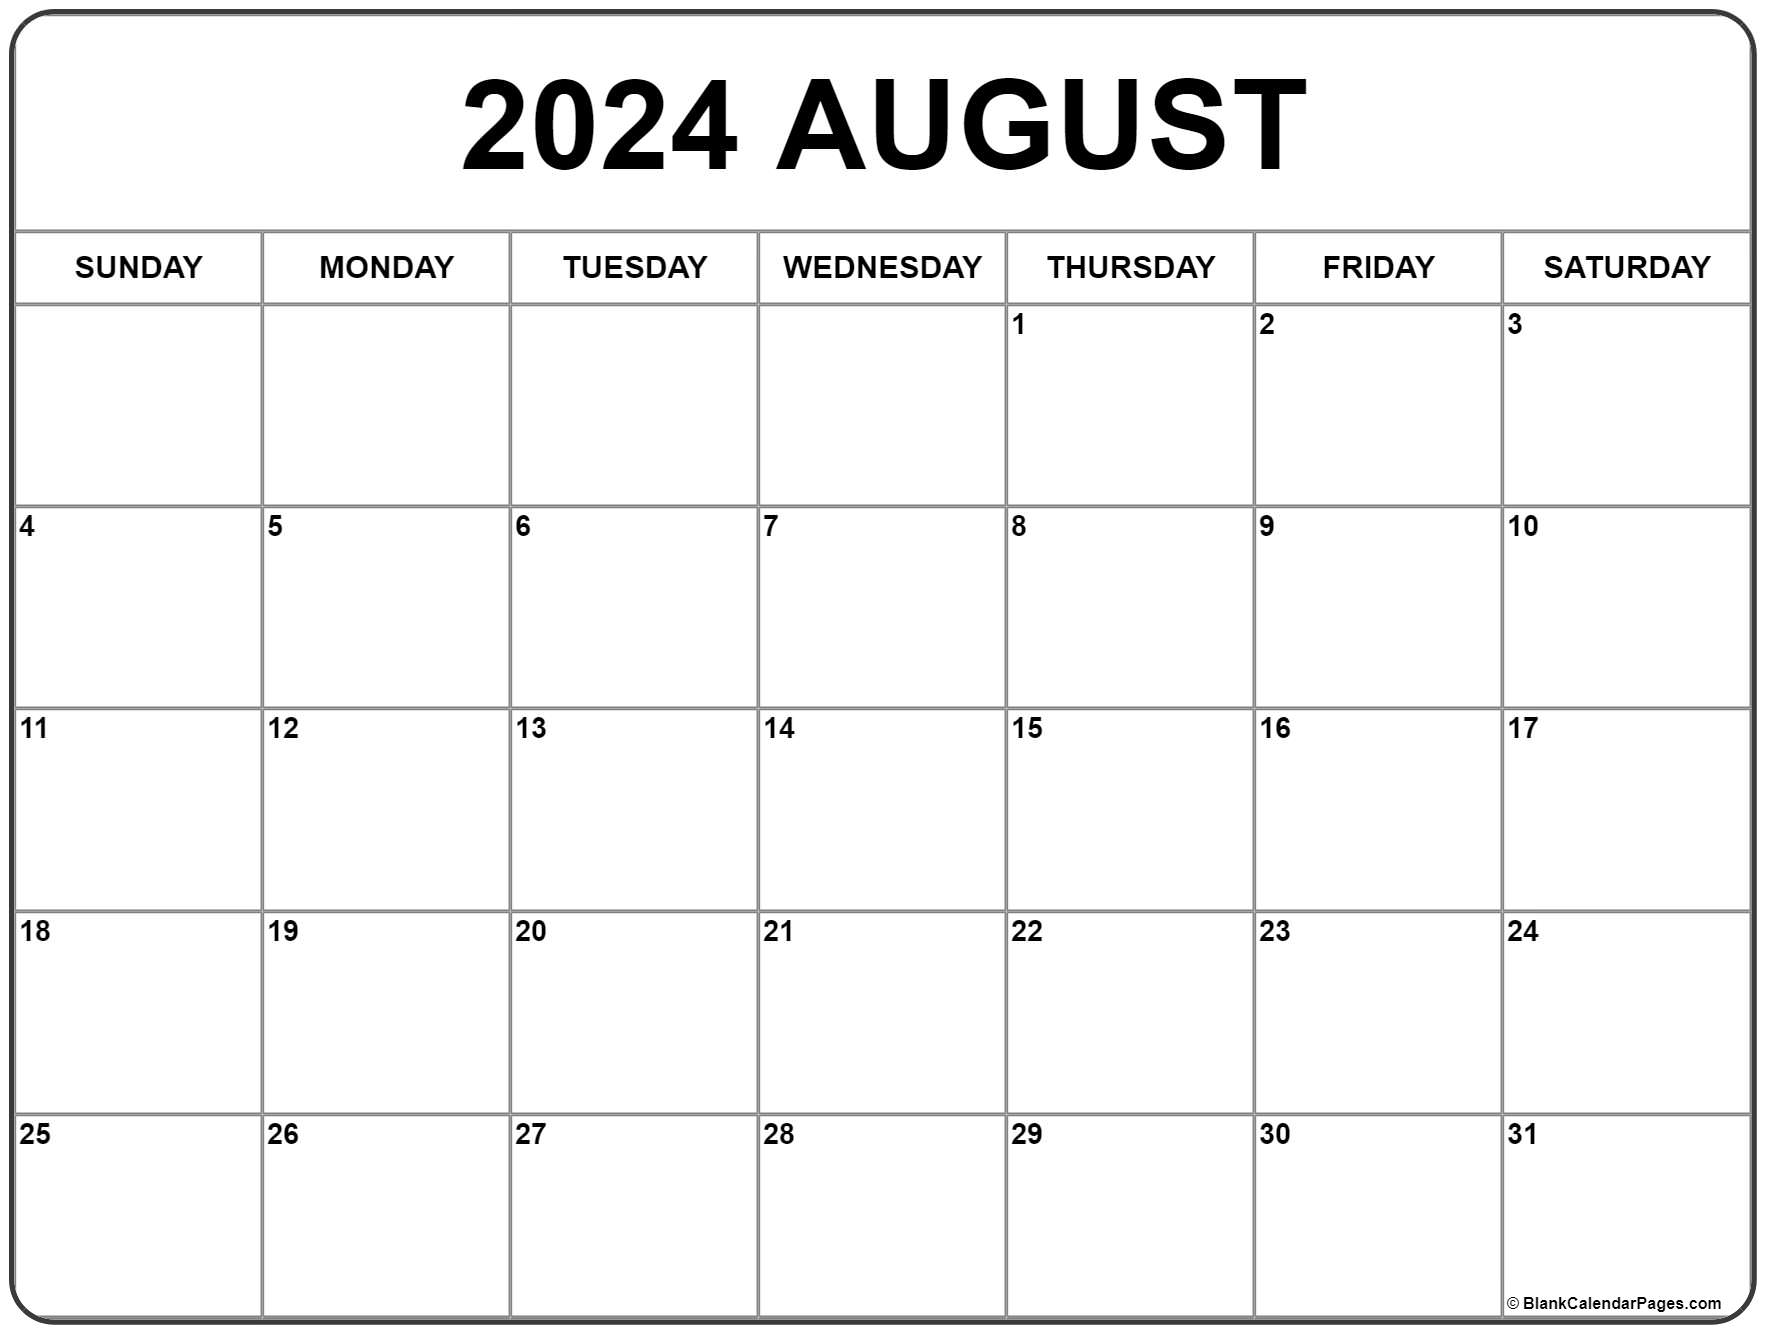 Monthly Calendar August 2022 August 2022 Calendar | Free Printable Calendar Templates